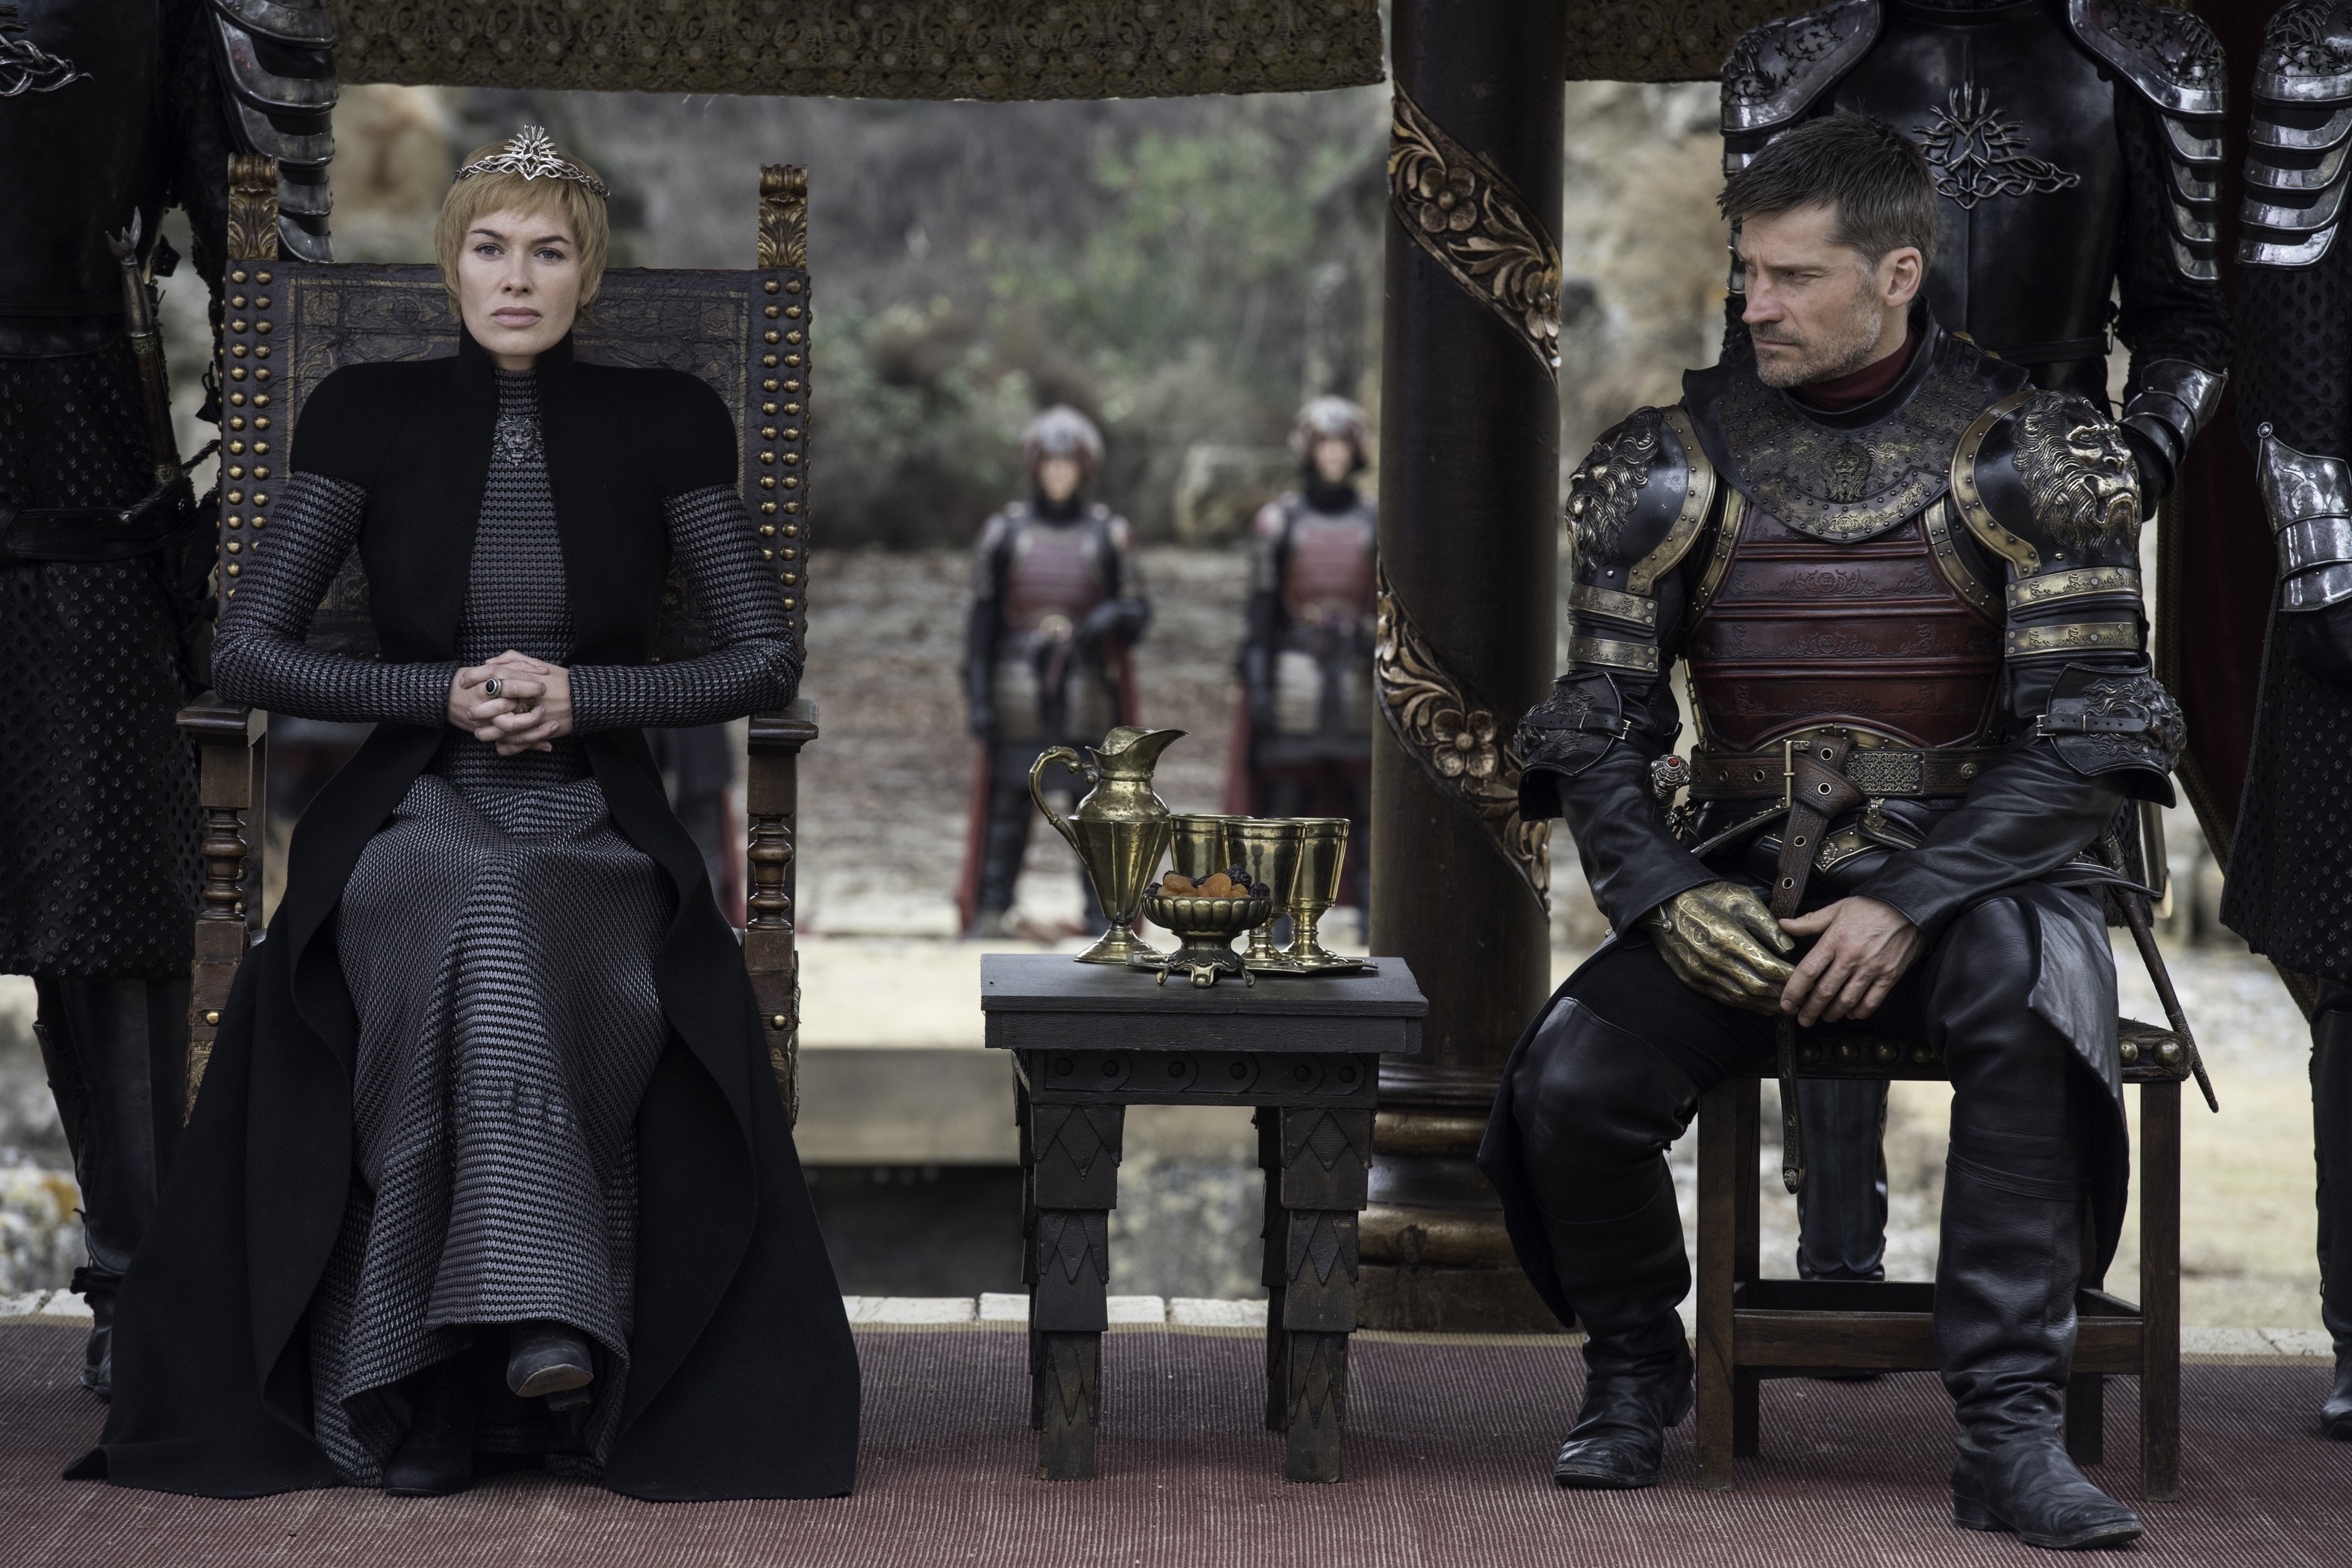 Lena Headey and Nikolaj Coster-Waldau as Cersei Lannister and Jaime Lannister